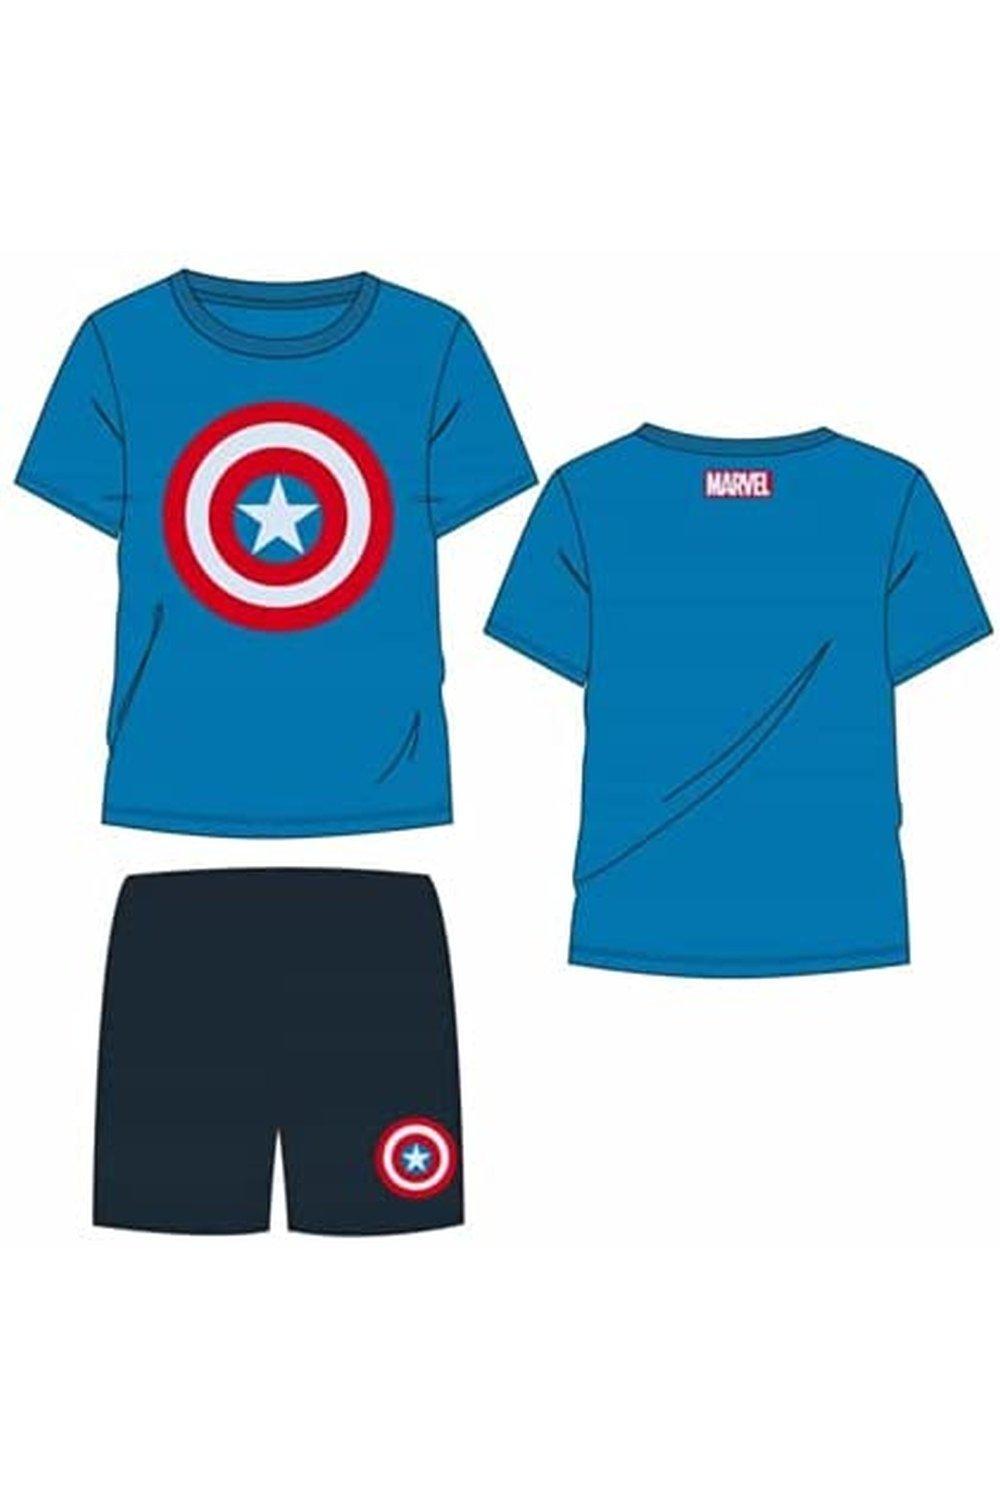 Avengers Captain America Pyjama Set